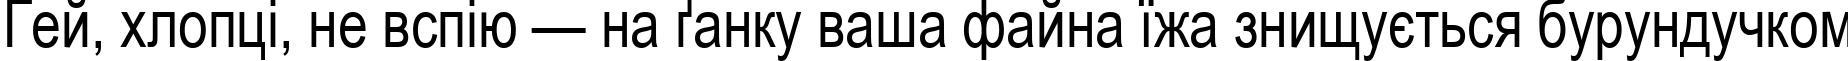 Пример написания шрифтом Arial80n текста на украинском